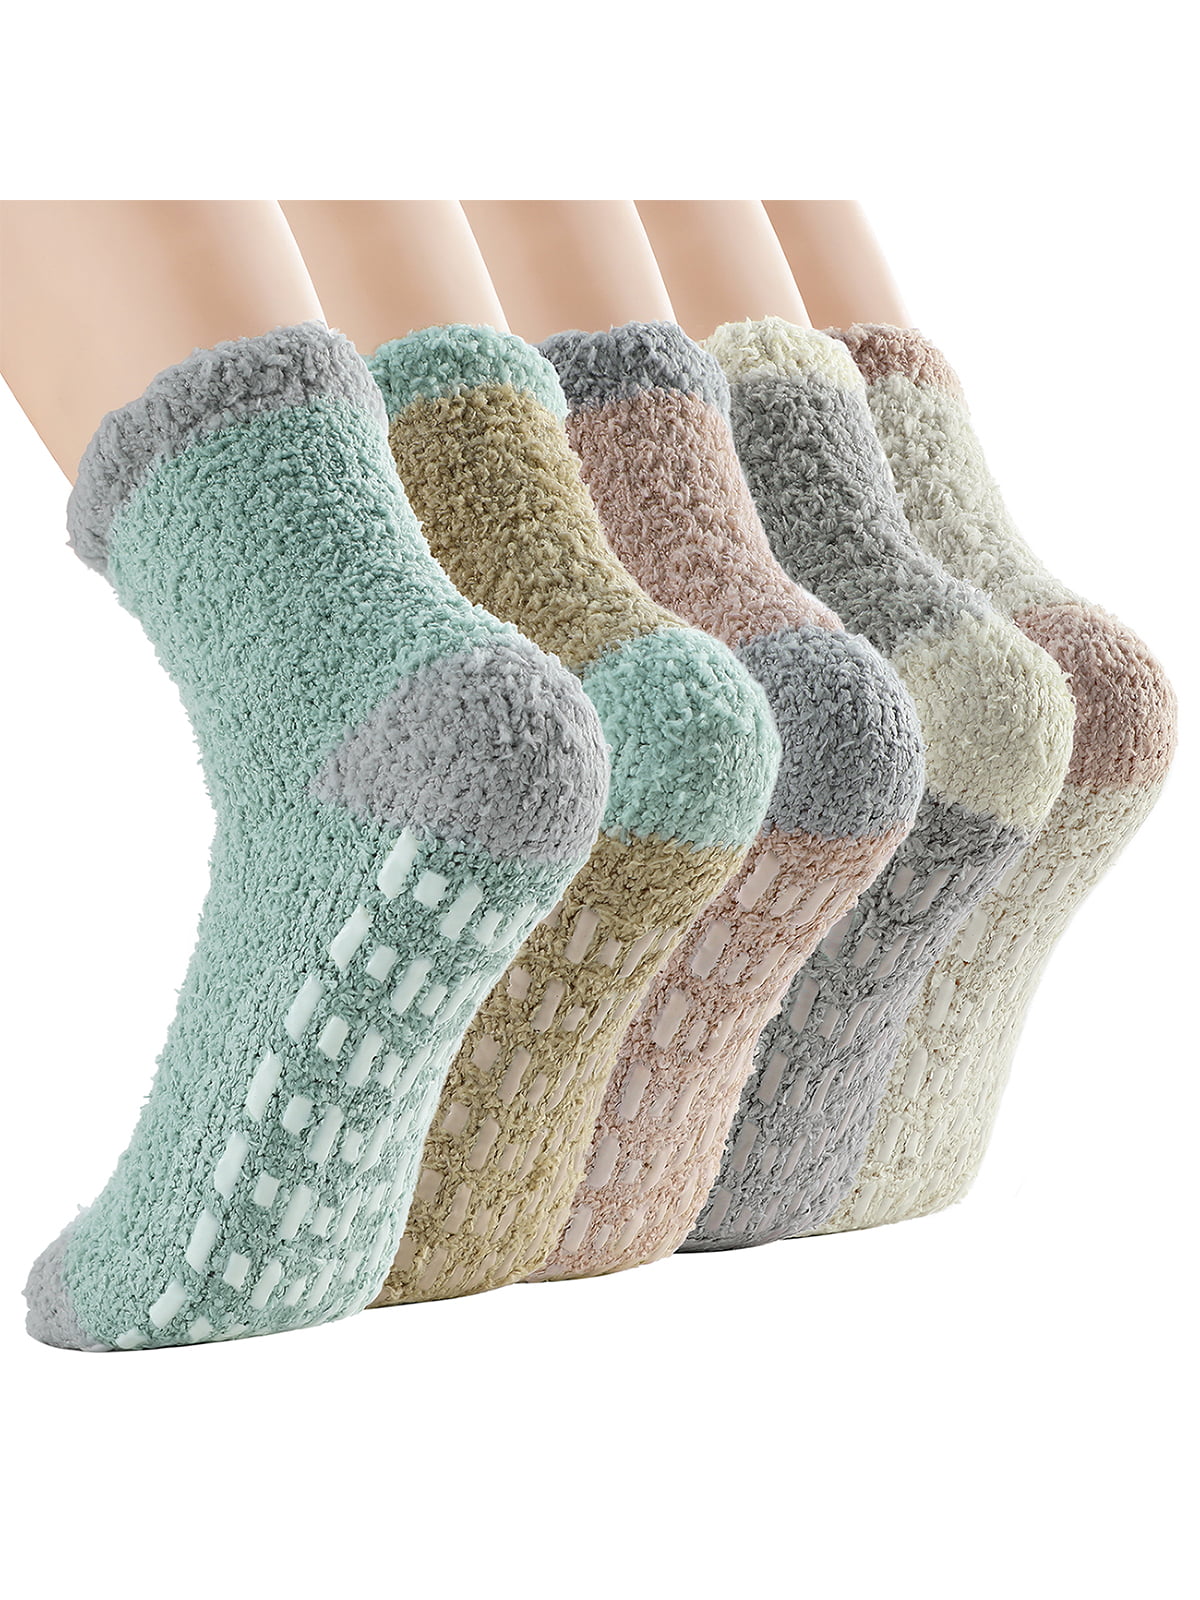 SKOLA 4 Pairs Cozy Winter Fuzzy Women Socks Grip Slippers Fluffy